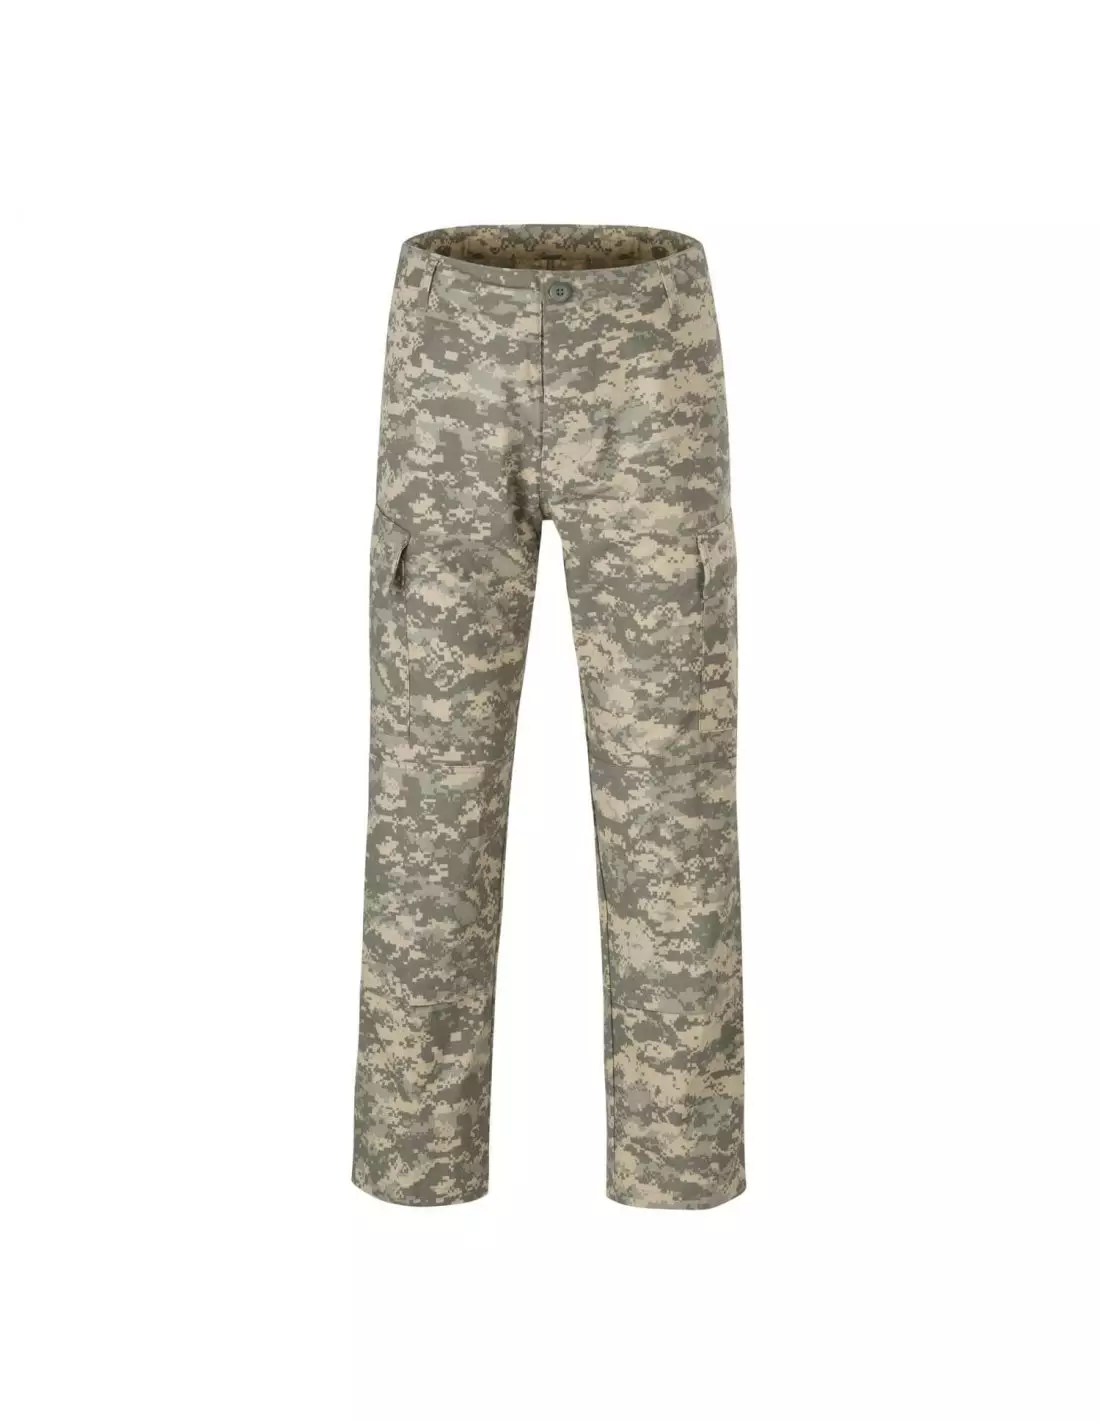 Helikon-Tex® ACU (Army Combat Uniform) Trousers / Pants - Ripstop